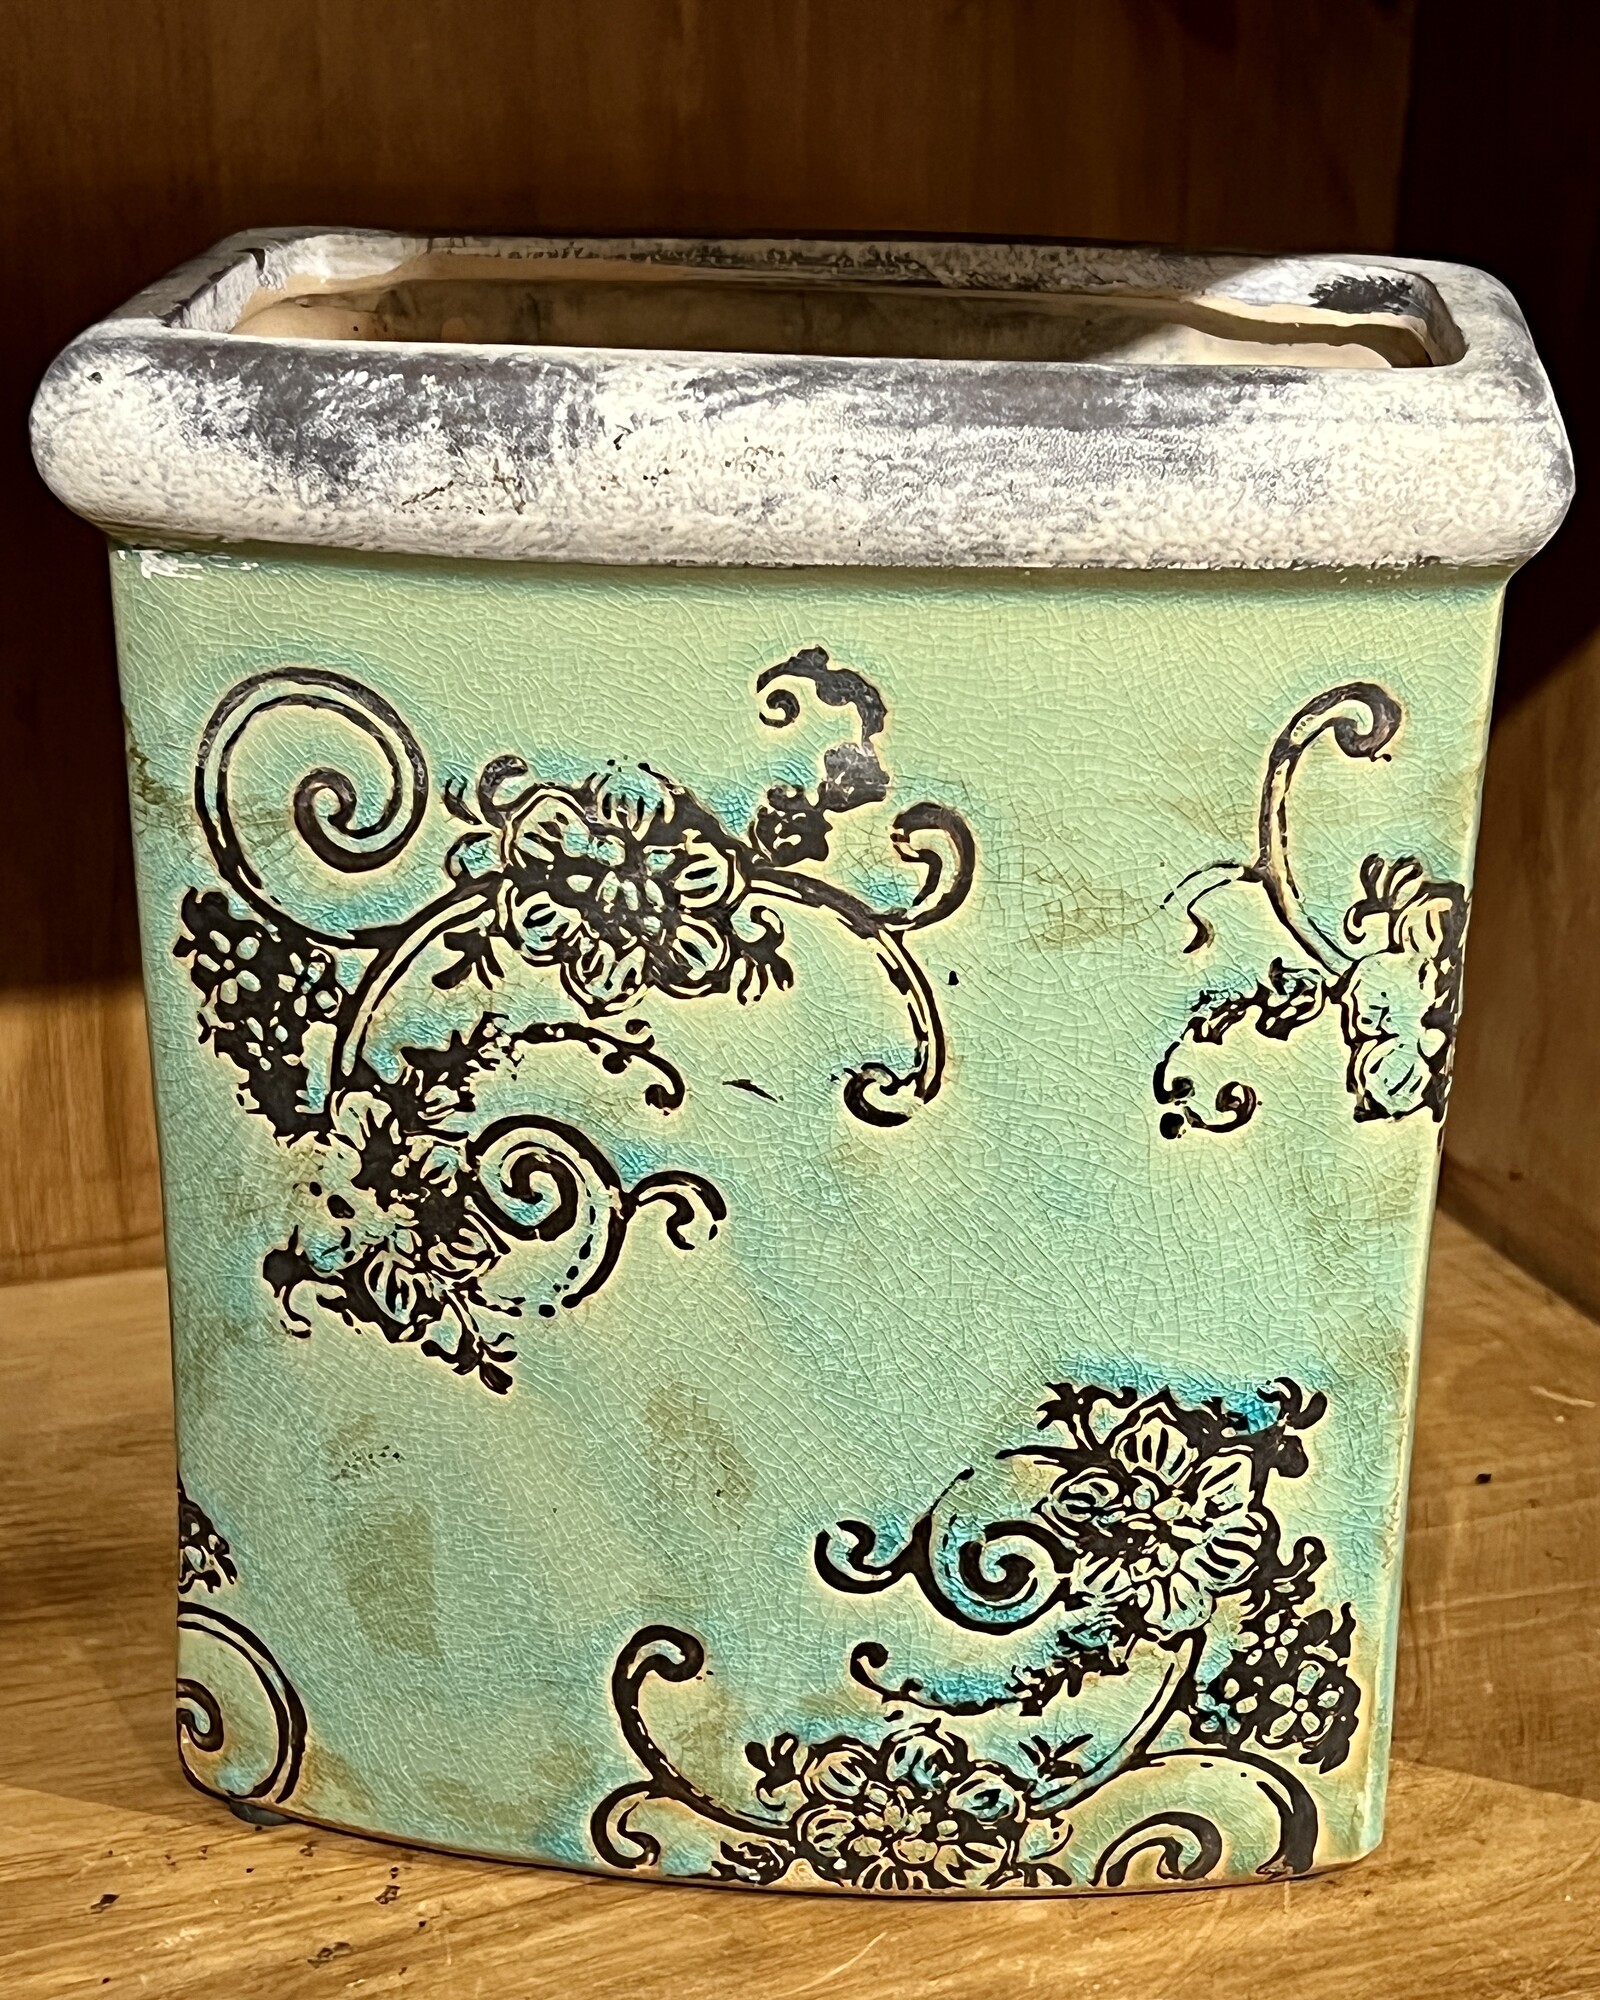 Pottery Vase
Size: 7x4x8